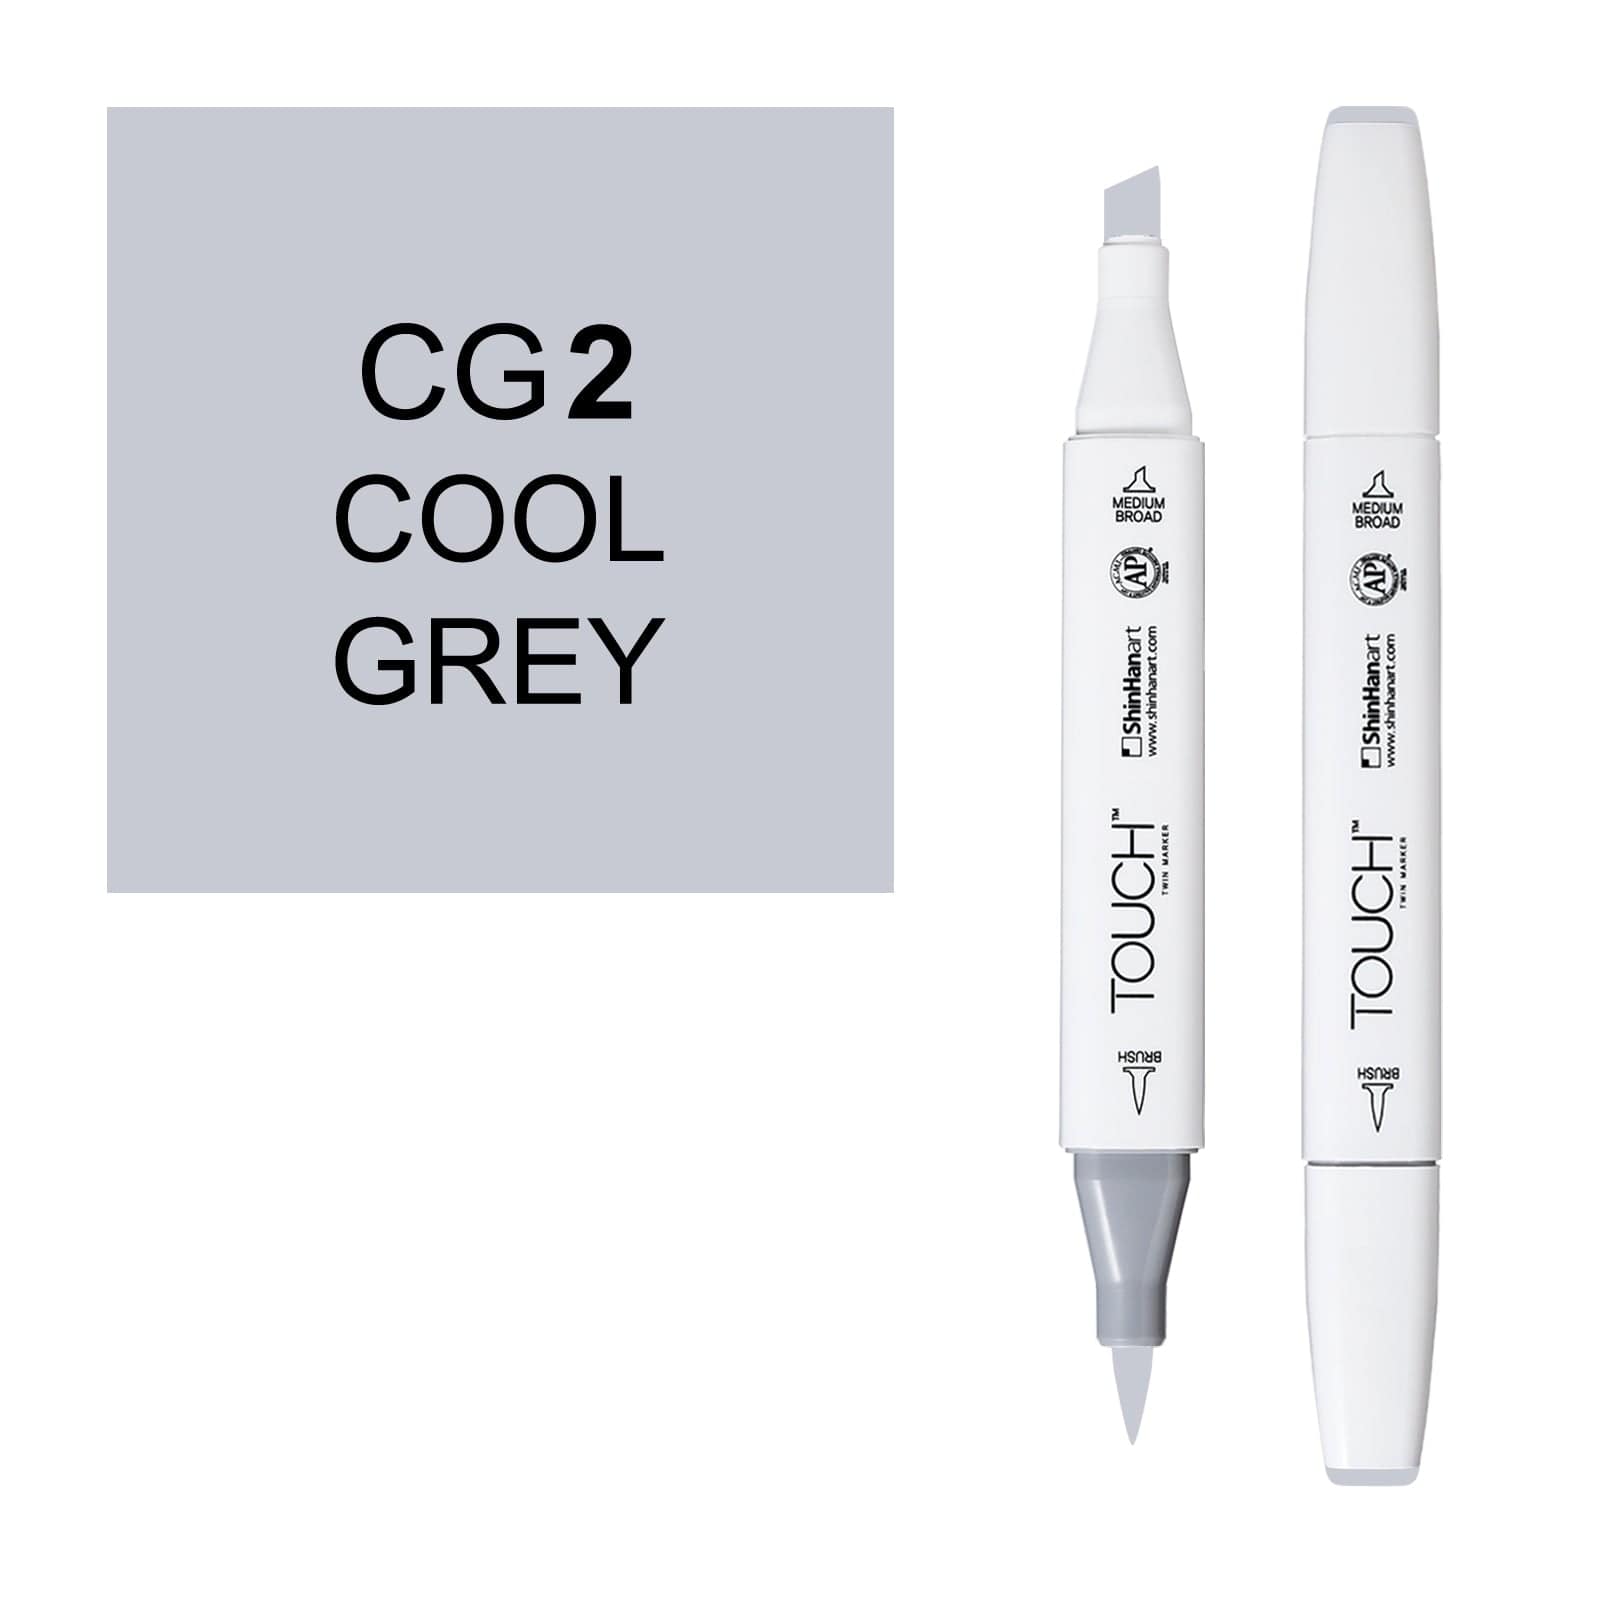 ShinHanart Touch Twin Brush Markers 2 Cool grey